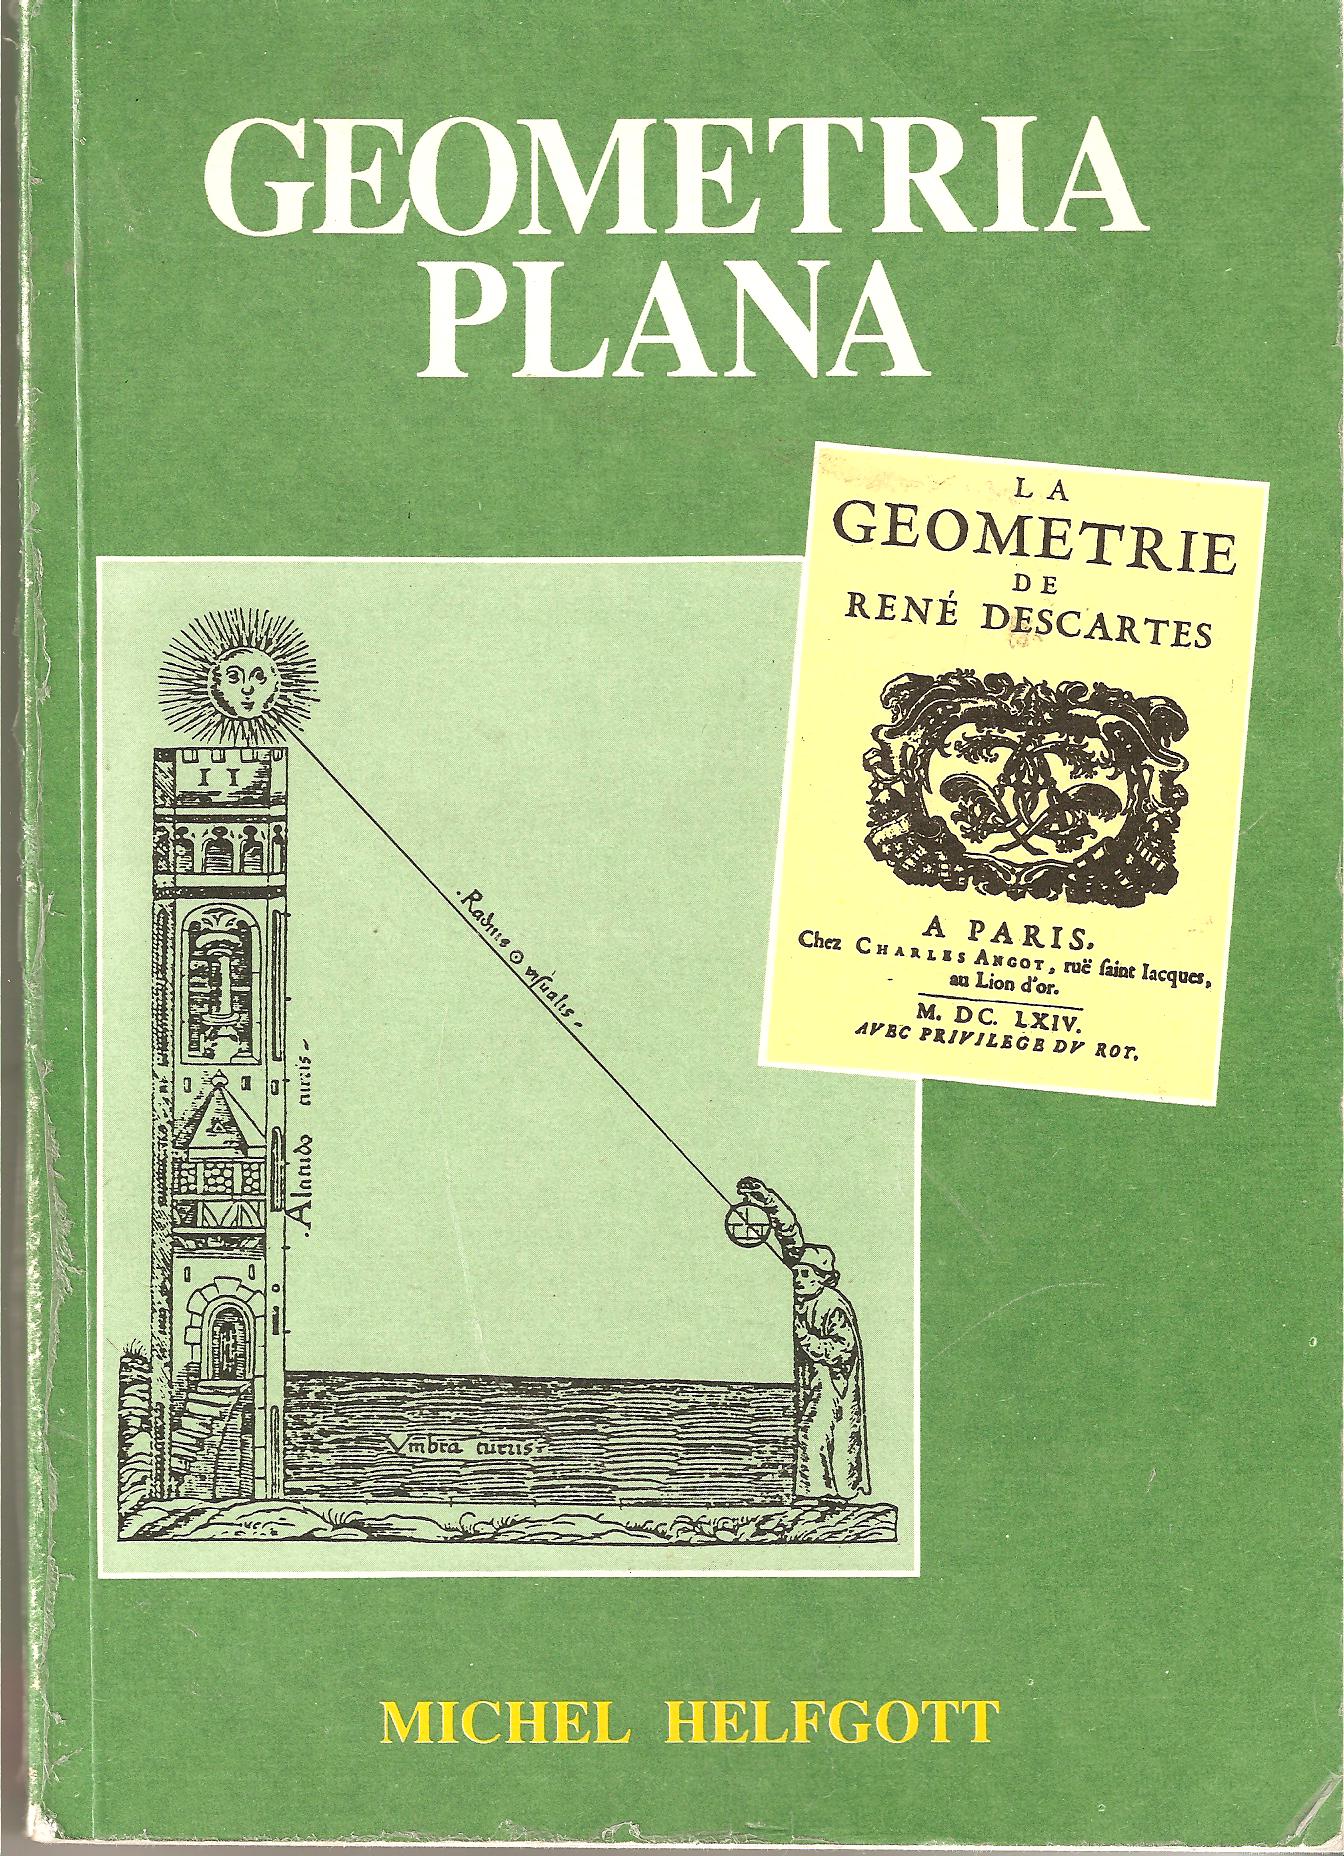 Geometria Plana book cover